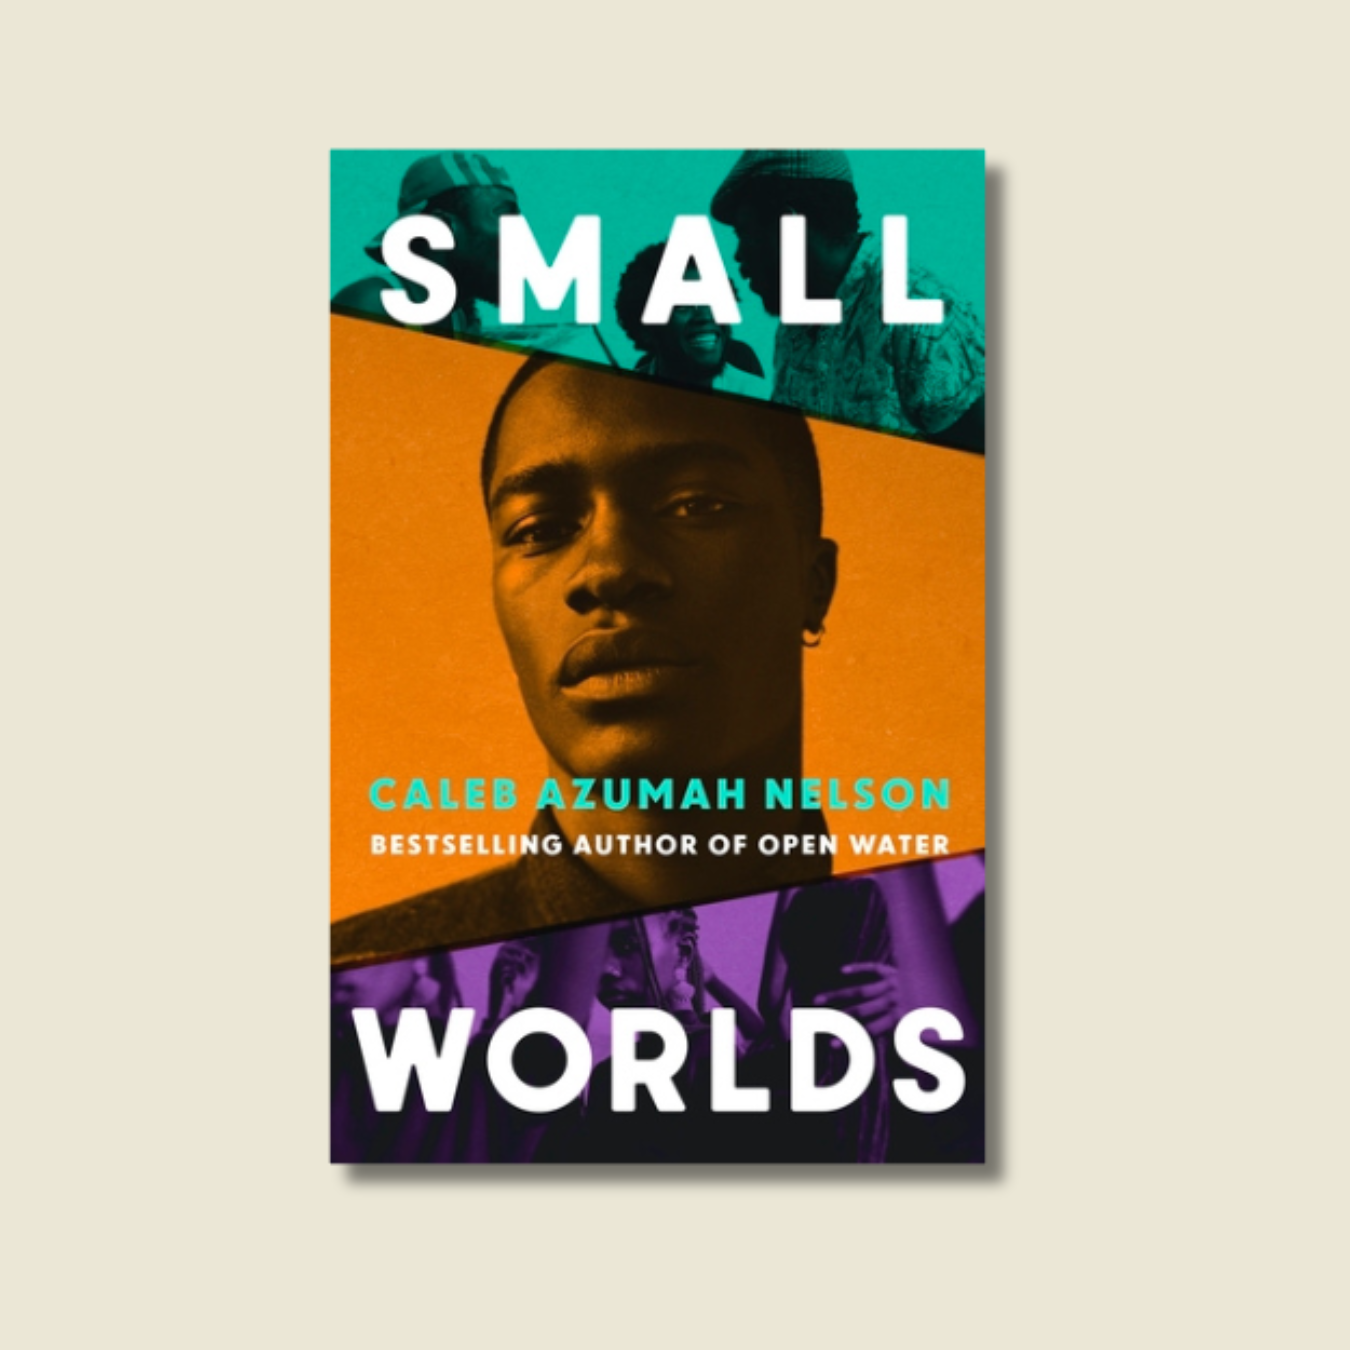 SMALL WORLDS BY CALEB AZUMAH NELSON